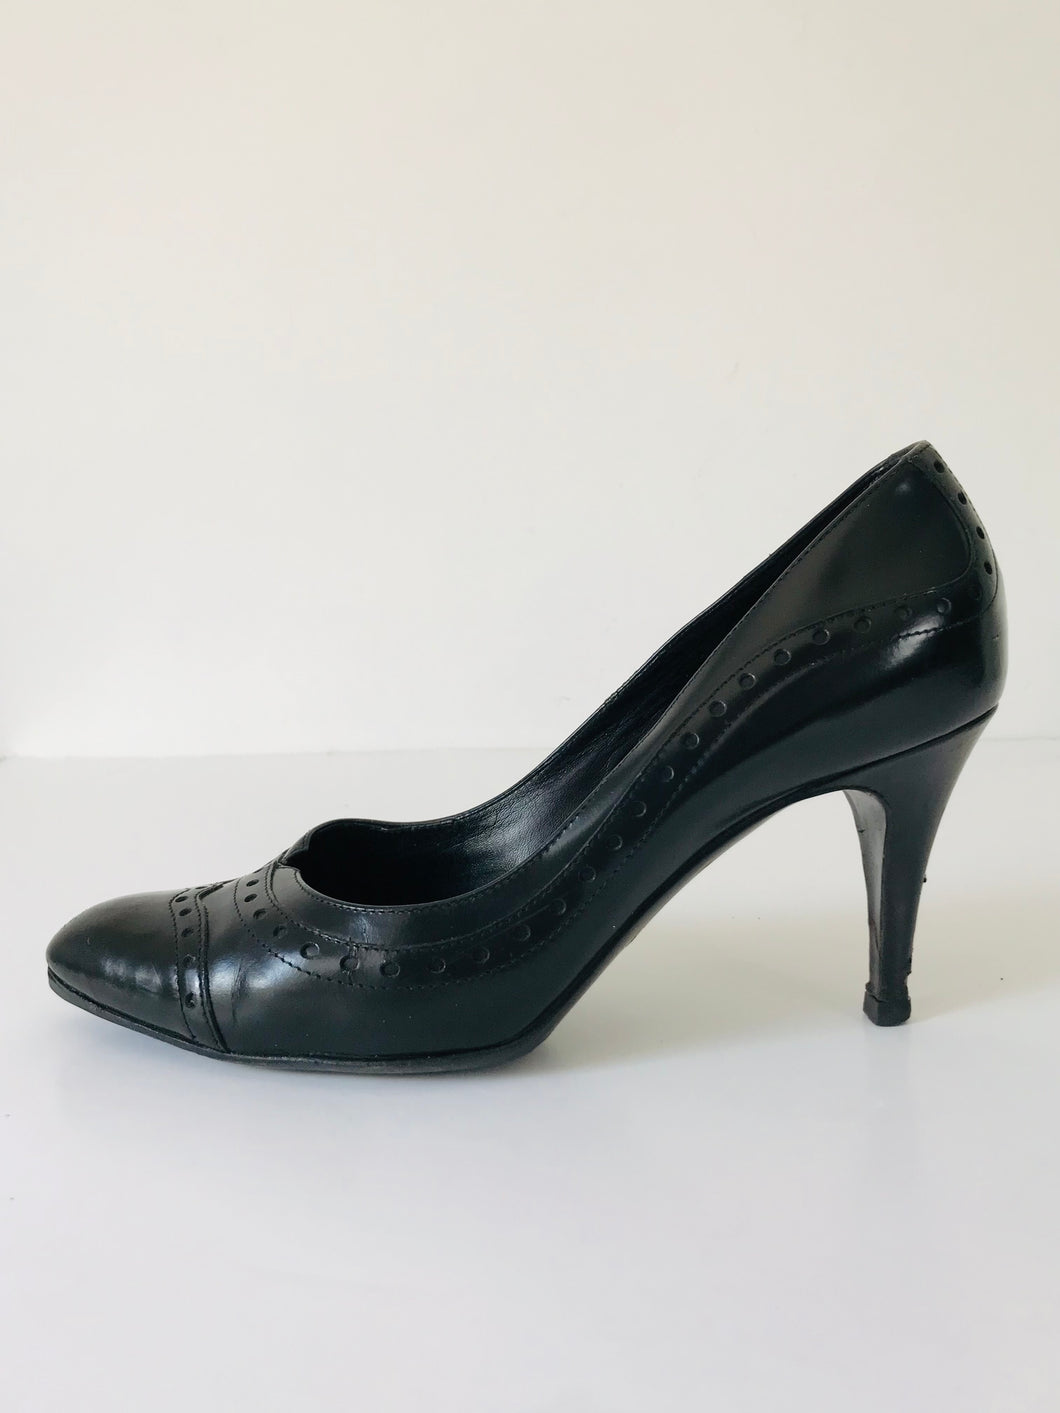 Armani Women's Leather Court Heels | 38.5 UK5.5 | Black